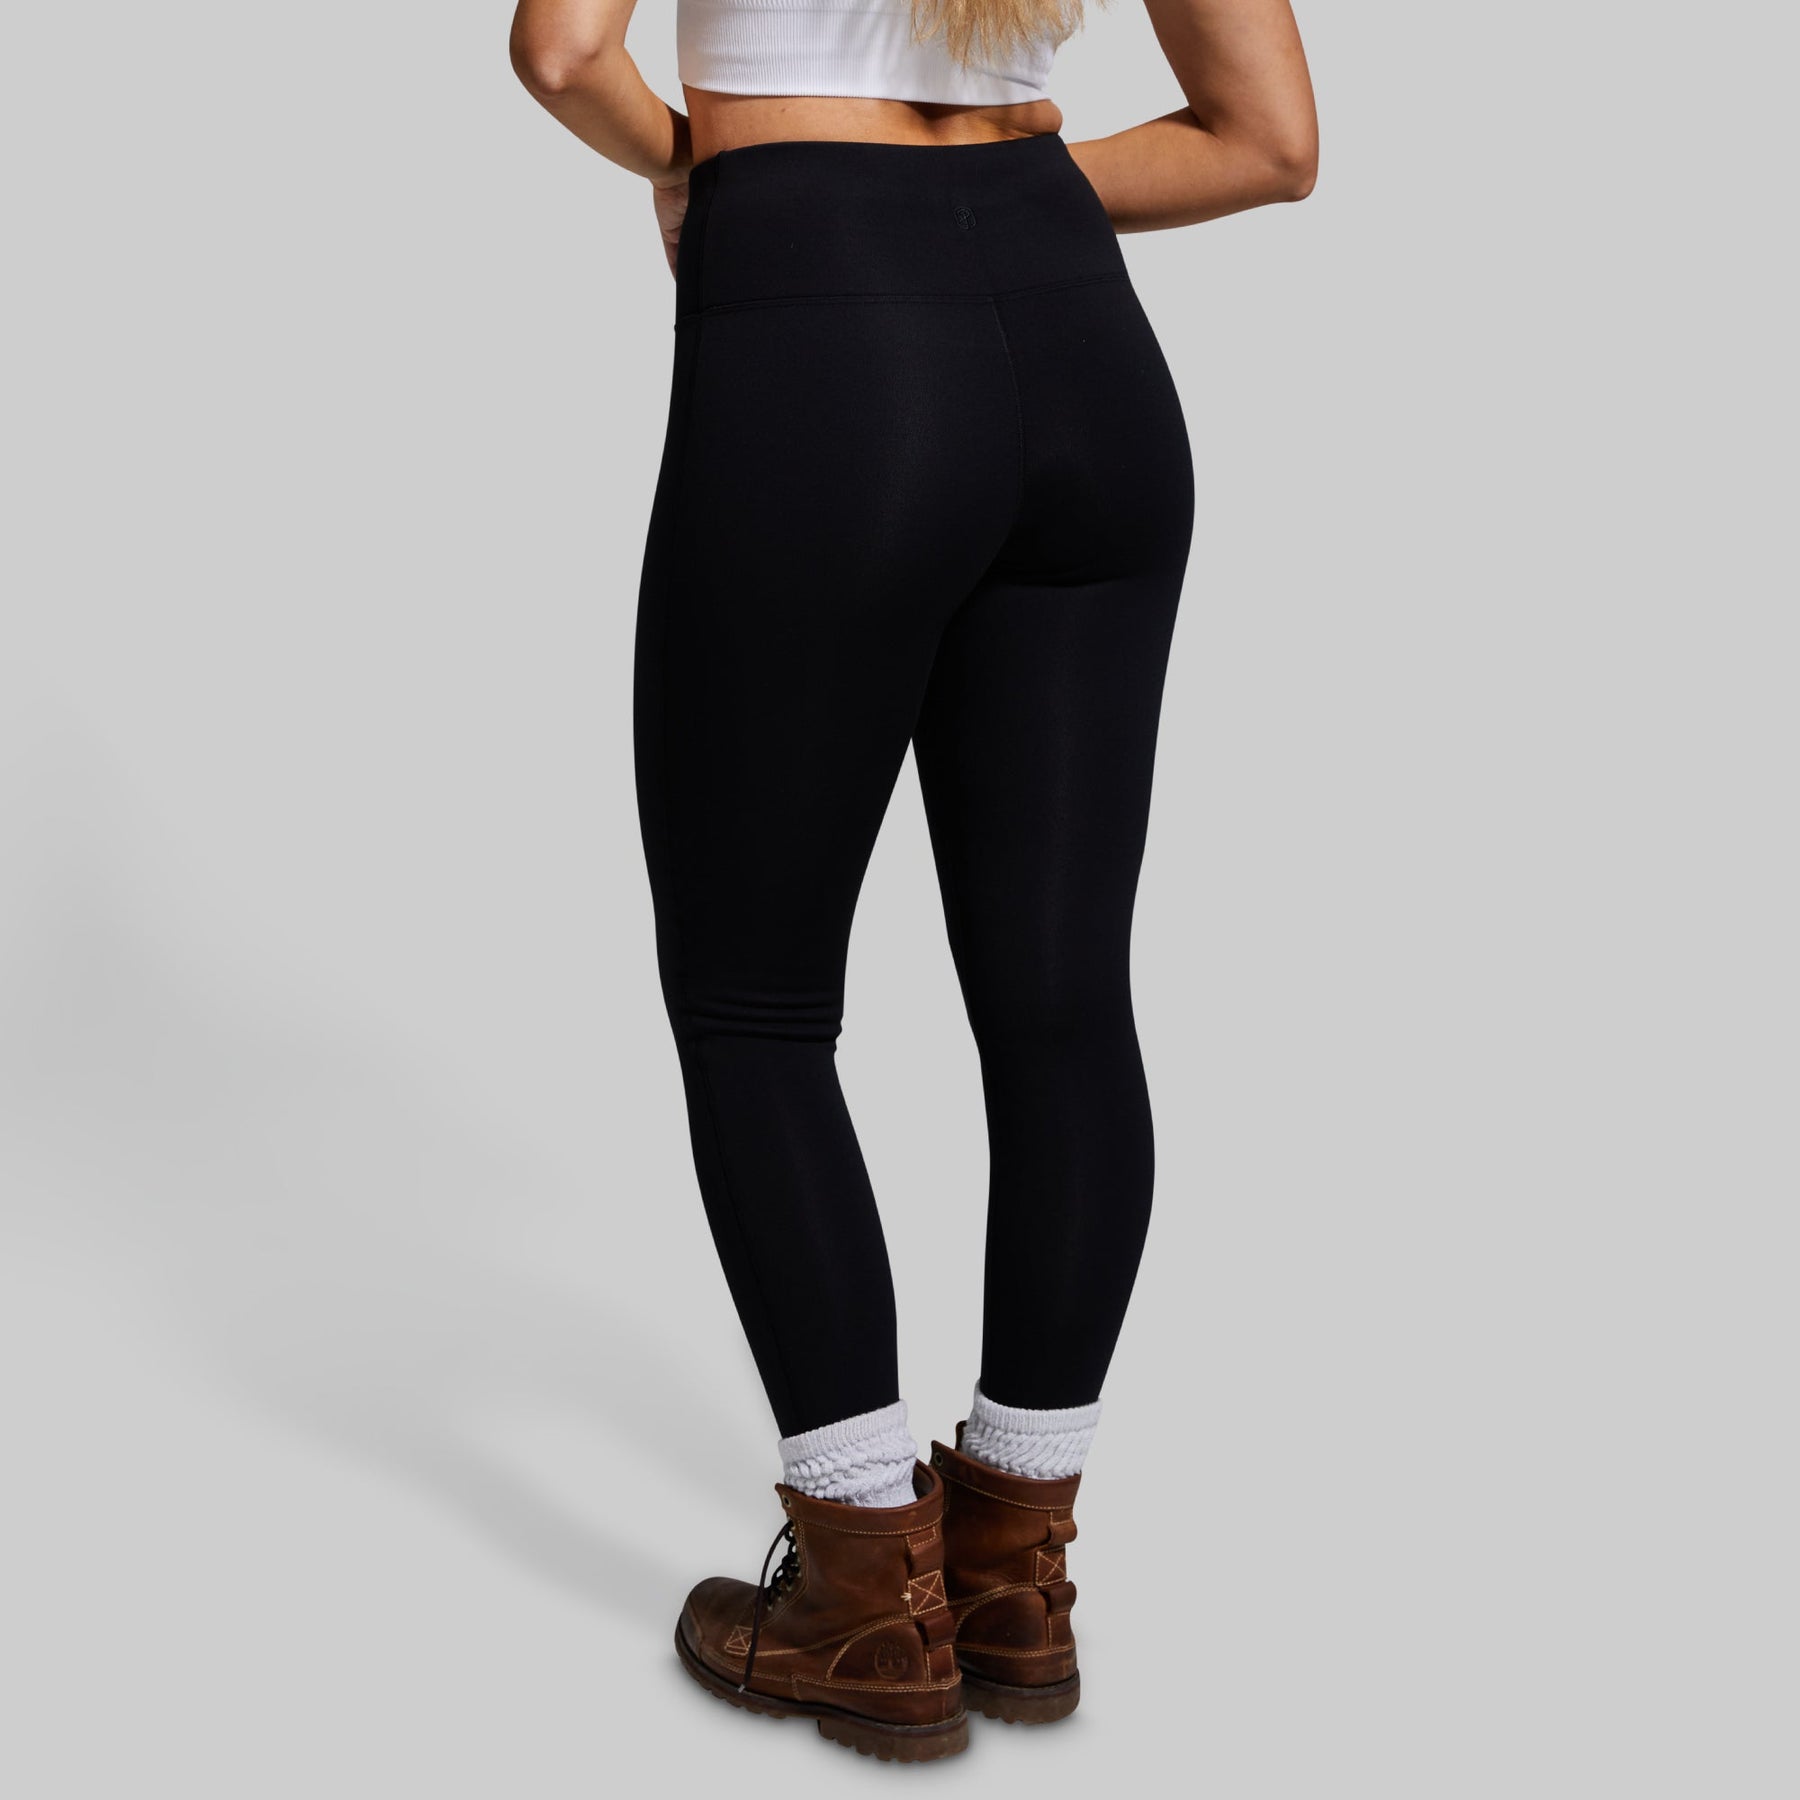 XL) Air Active Fleece-lined leggings (Black), Women's Fashion